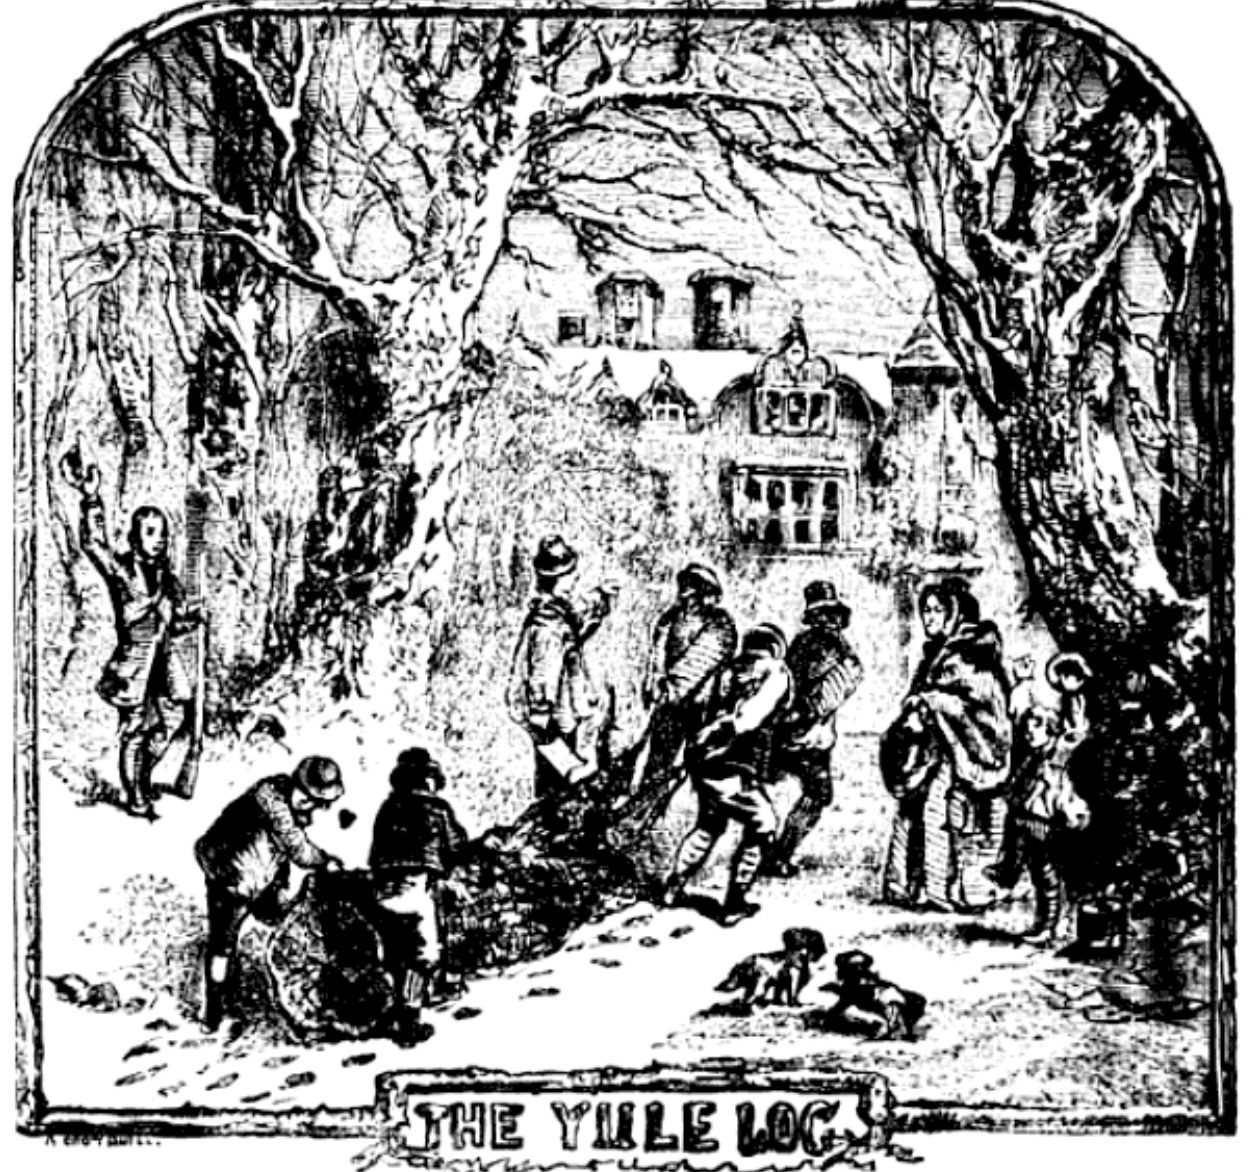 Hauling a Yule log in 1832.